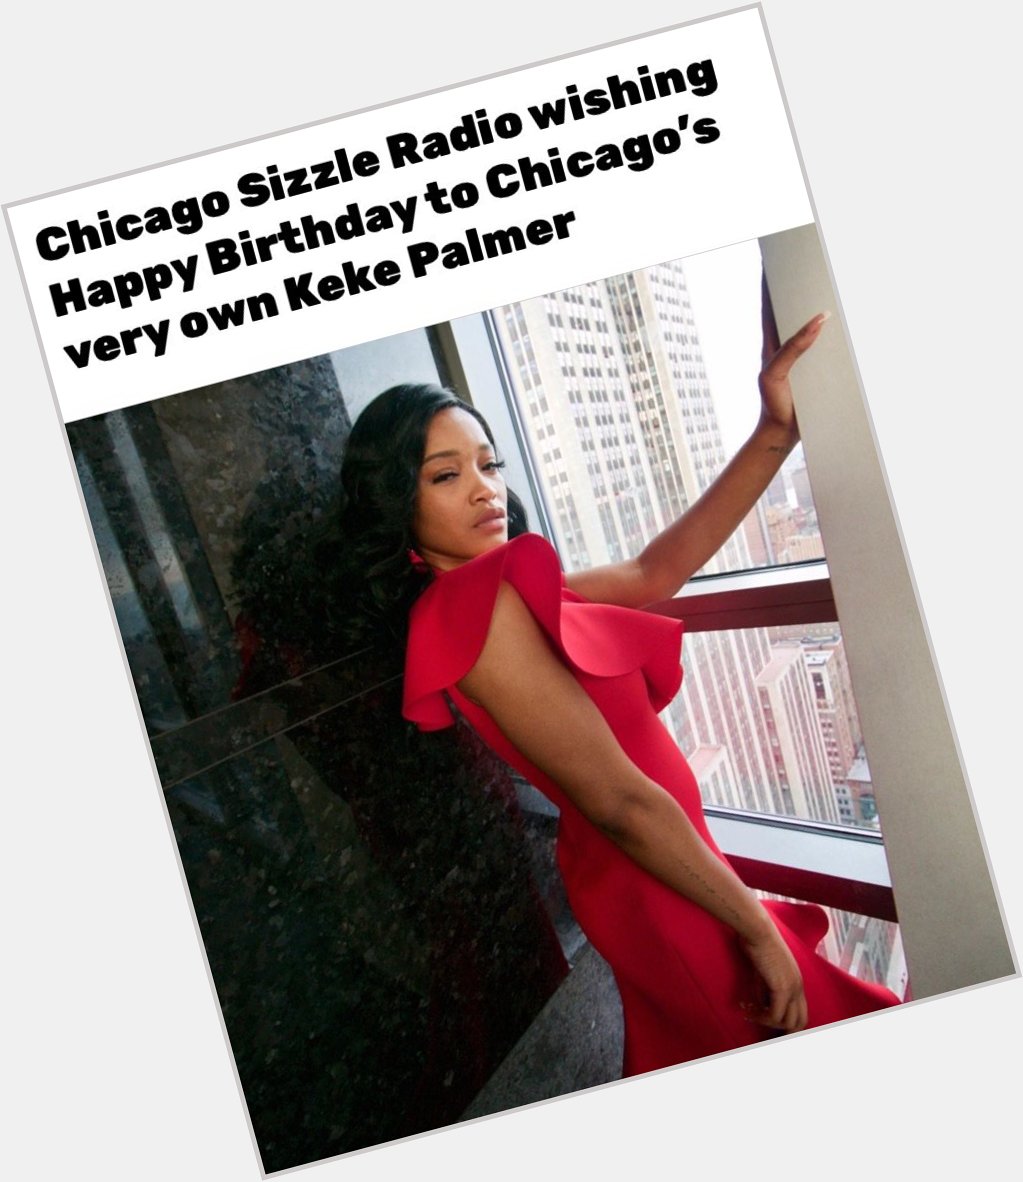 Chicago Sizzle Radio wishing Chicago s very own Keke Palmer a Happy Birthday     